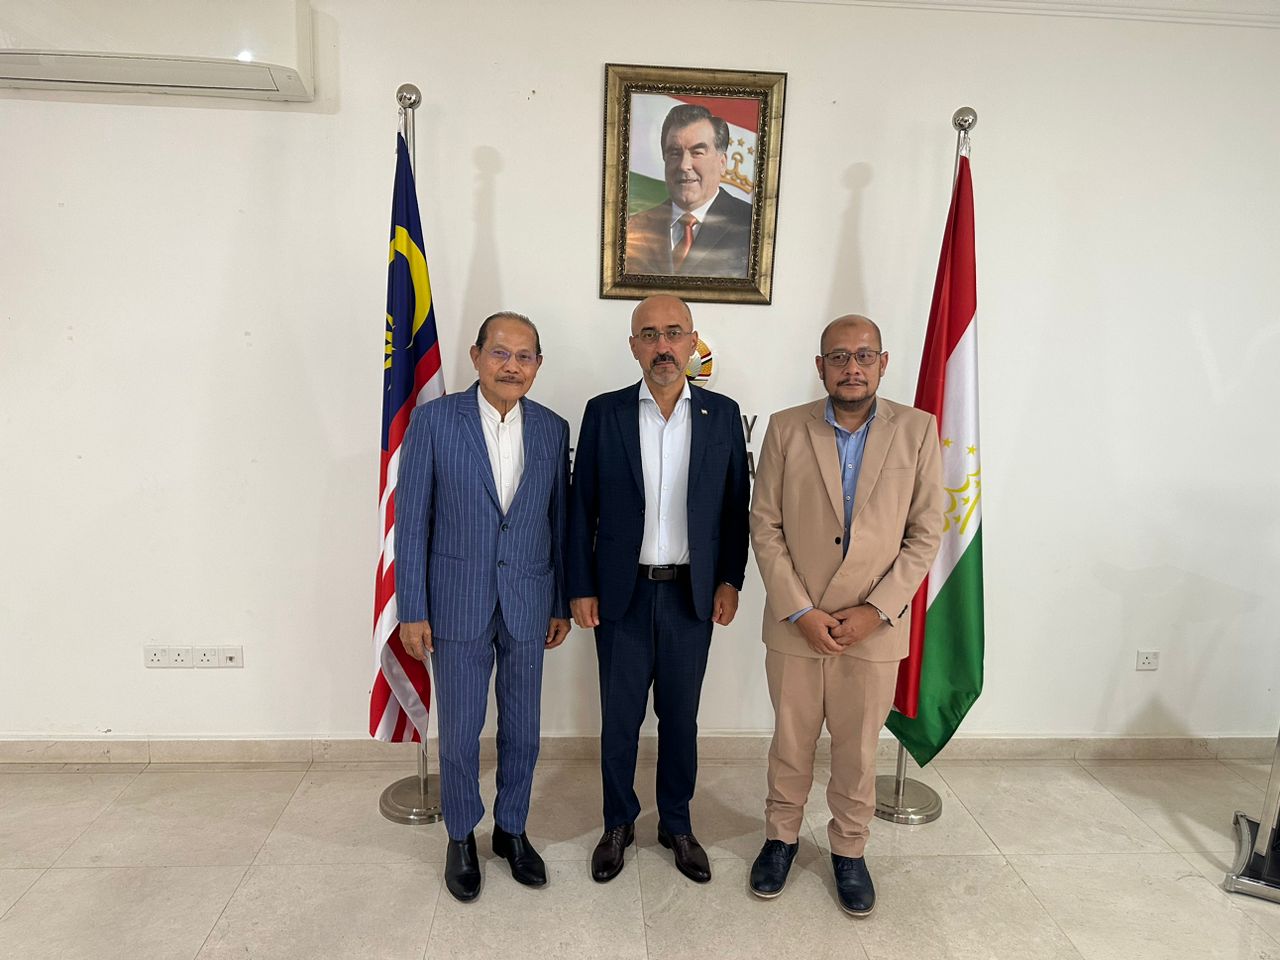 Ambassador of Tajikistan to Malaysia, met with Dato’ Dr. Mohd Khalid Harun, President of the Malaysia Tourism Agency Association (MATA) and Dato’ Jeffri Sulaiman, Deputy President of MATA